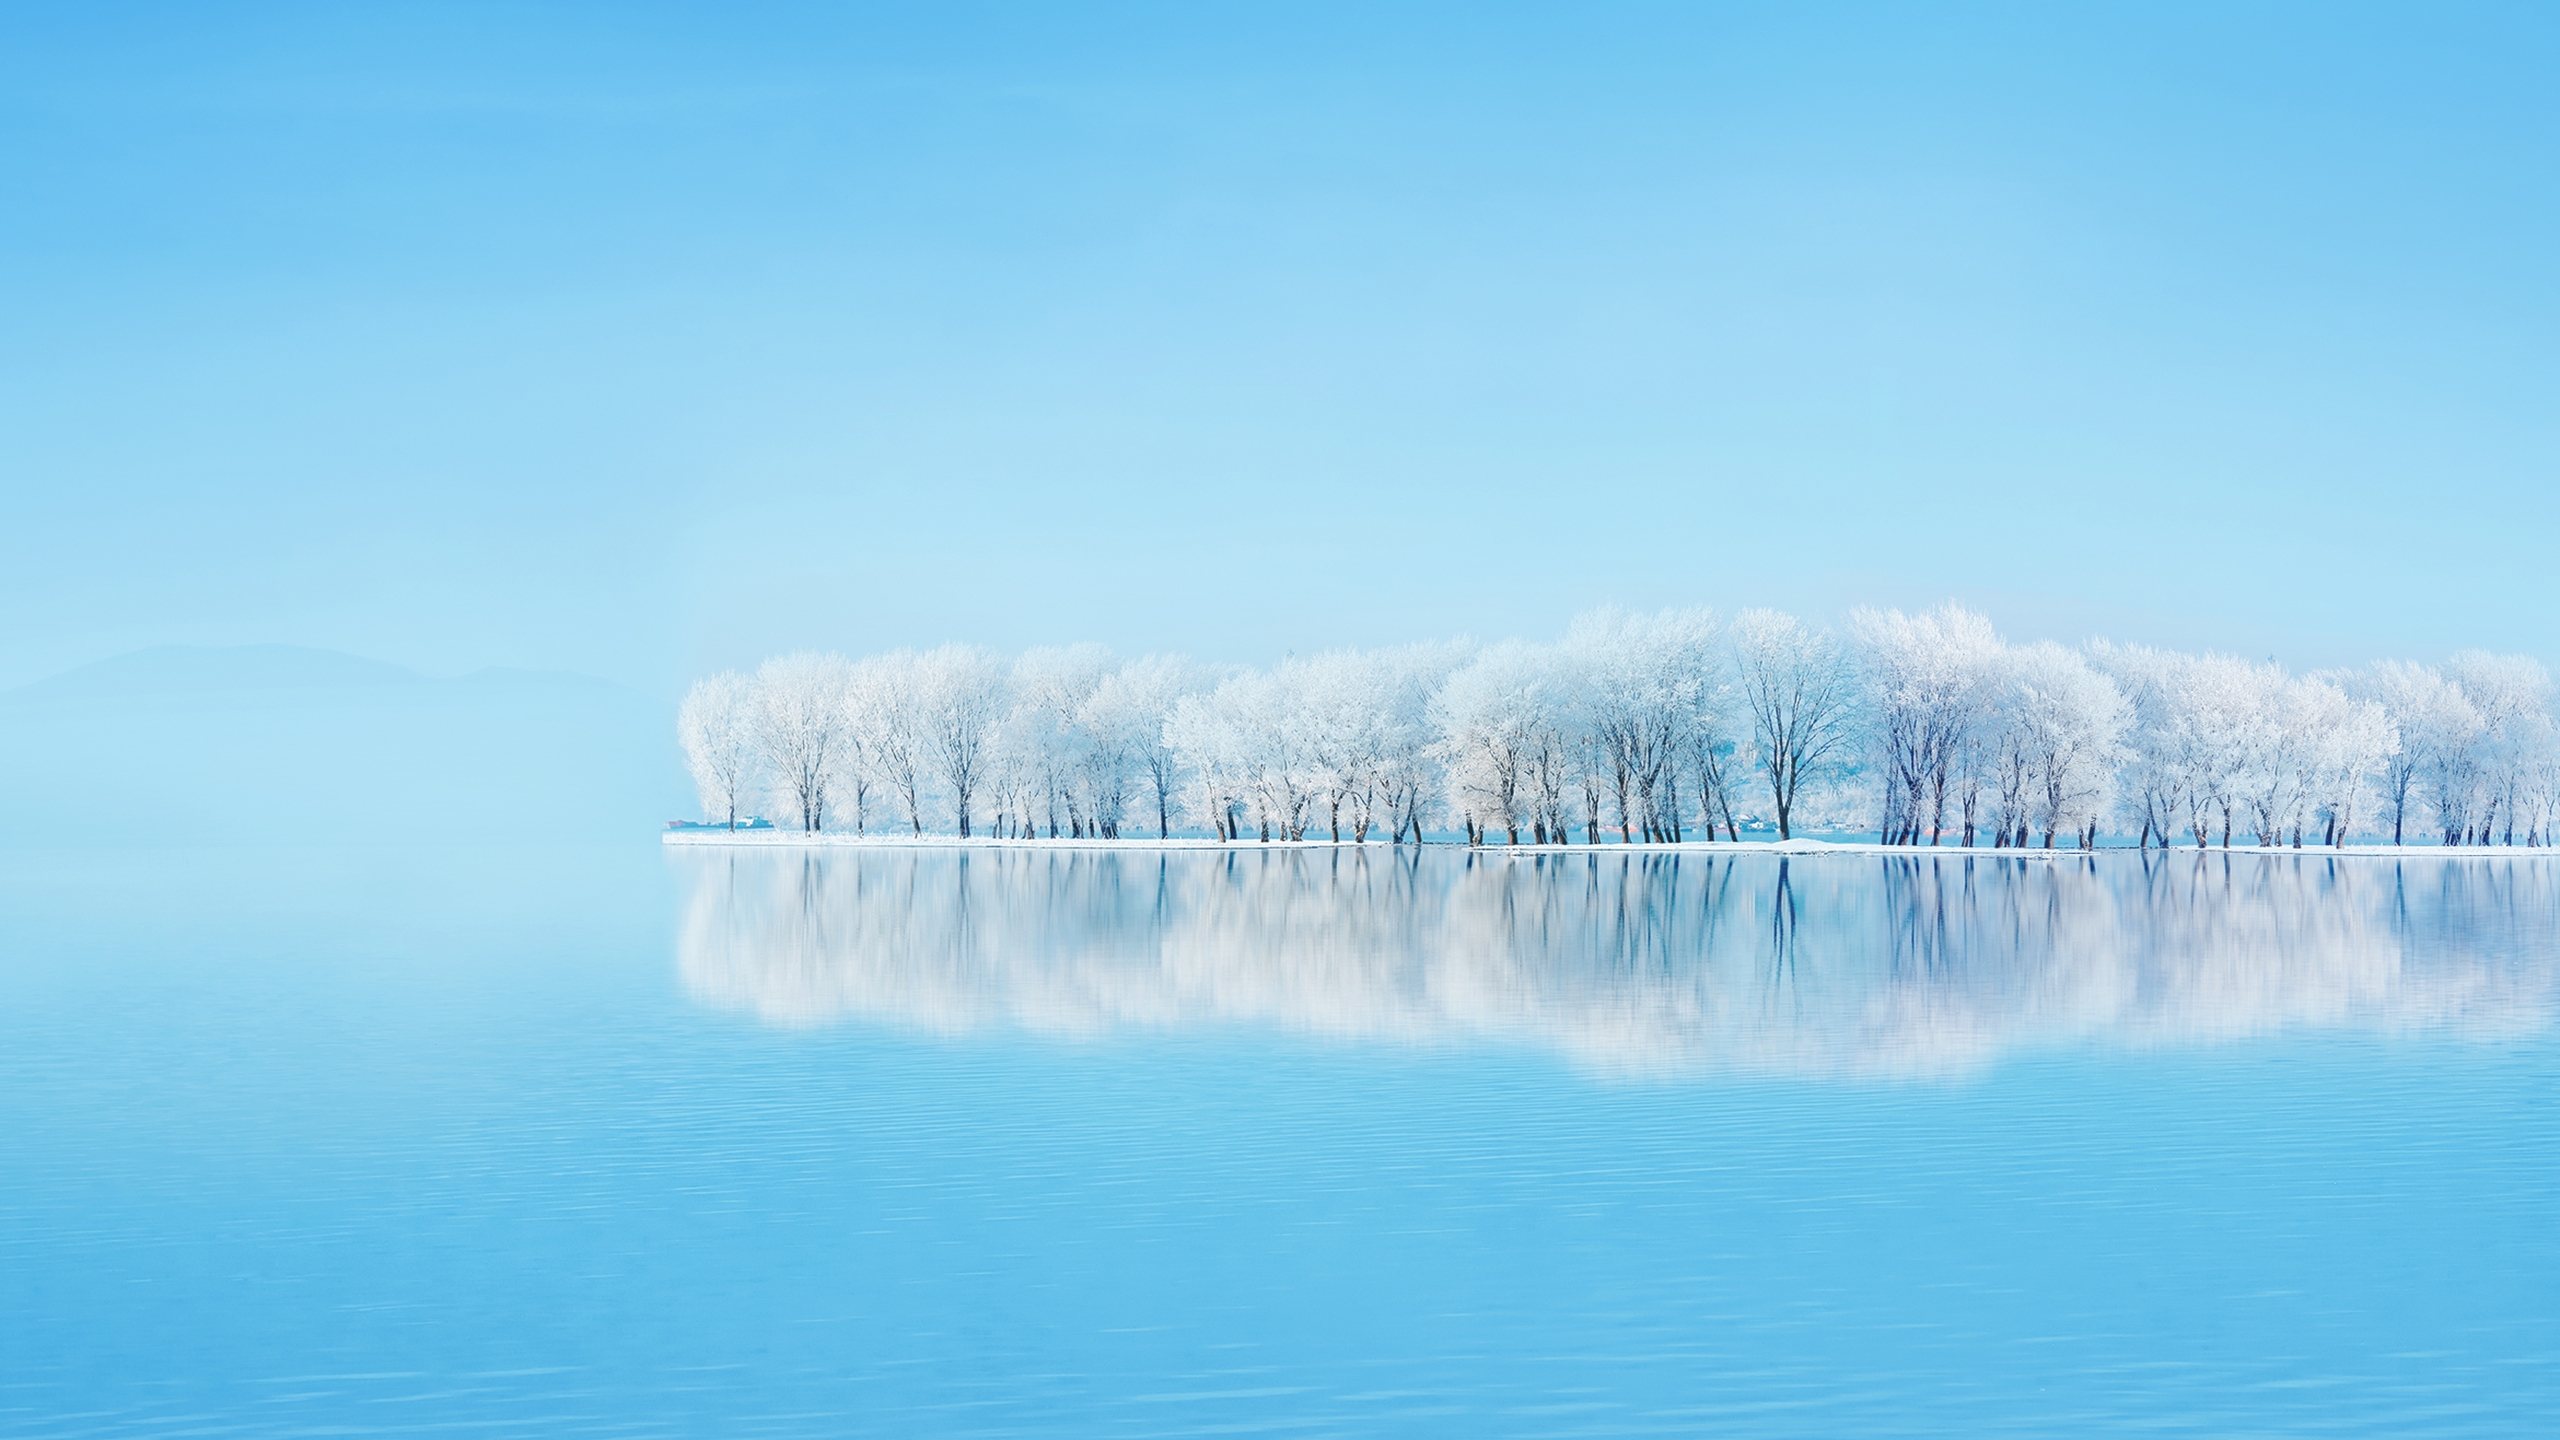 Wallpapers frozen trees sky winter on the desktop